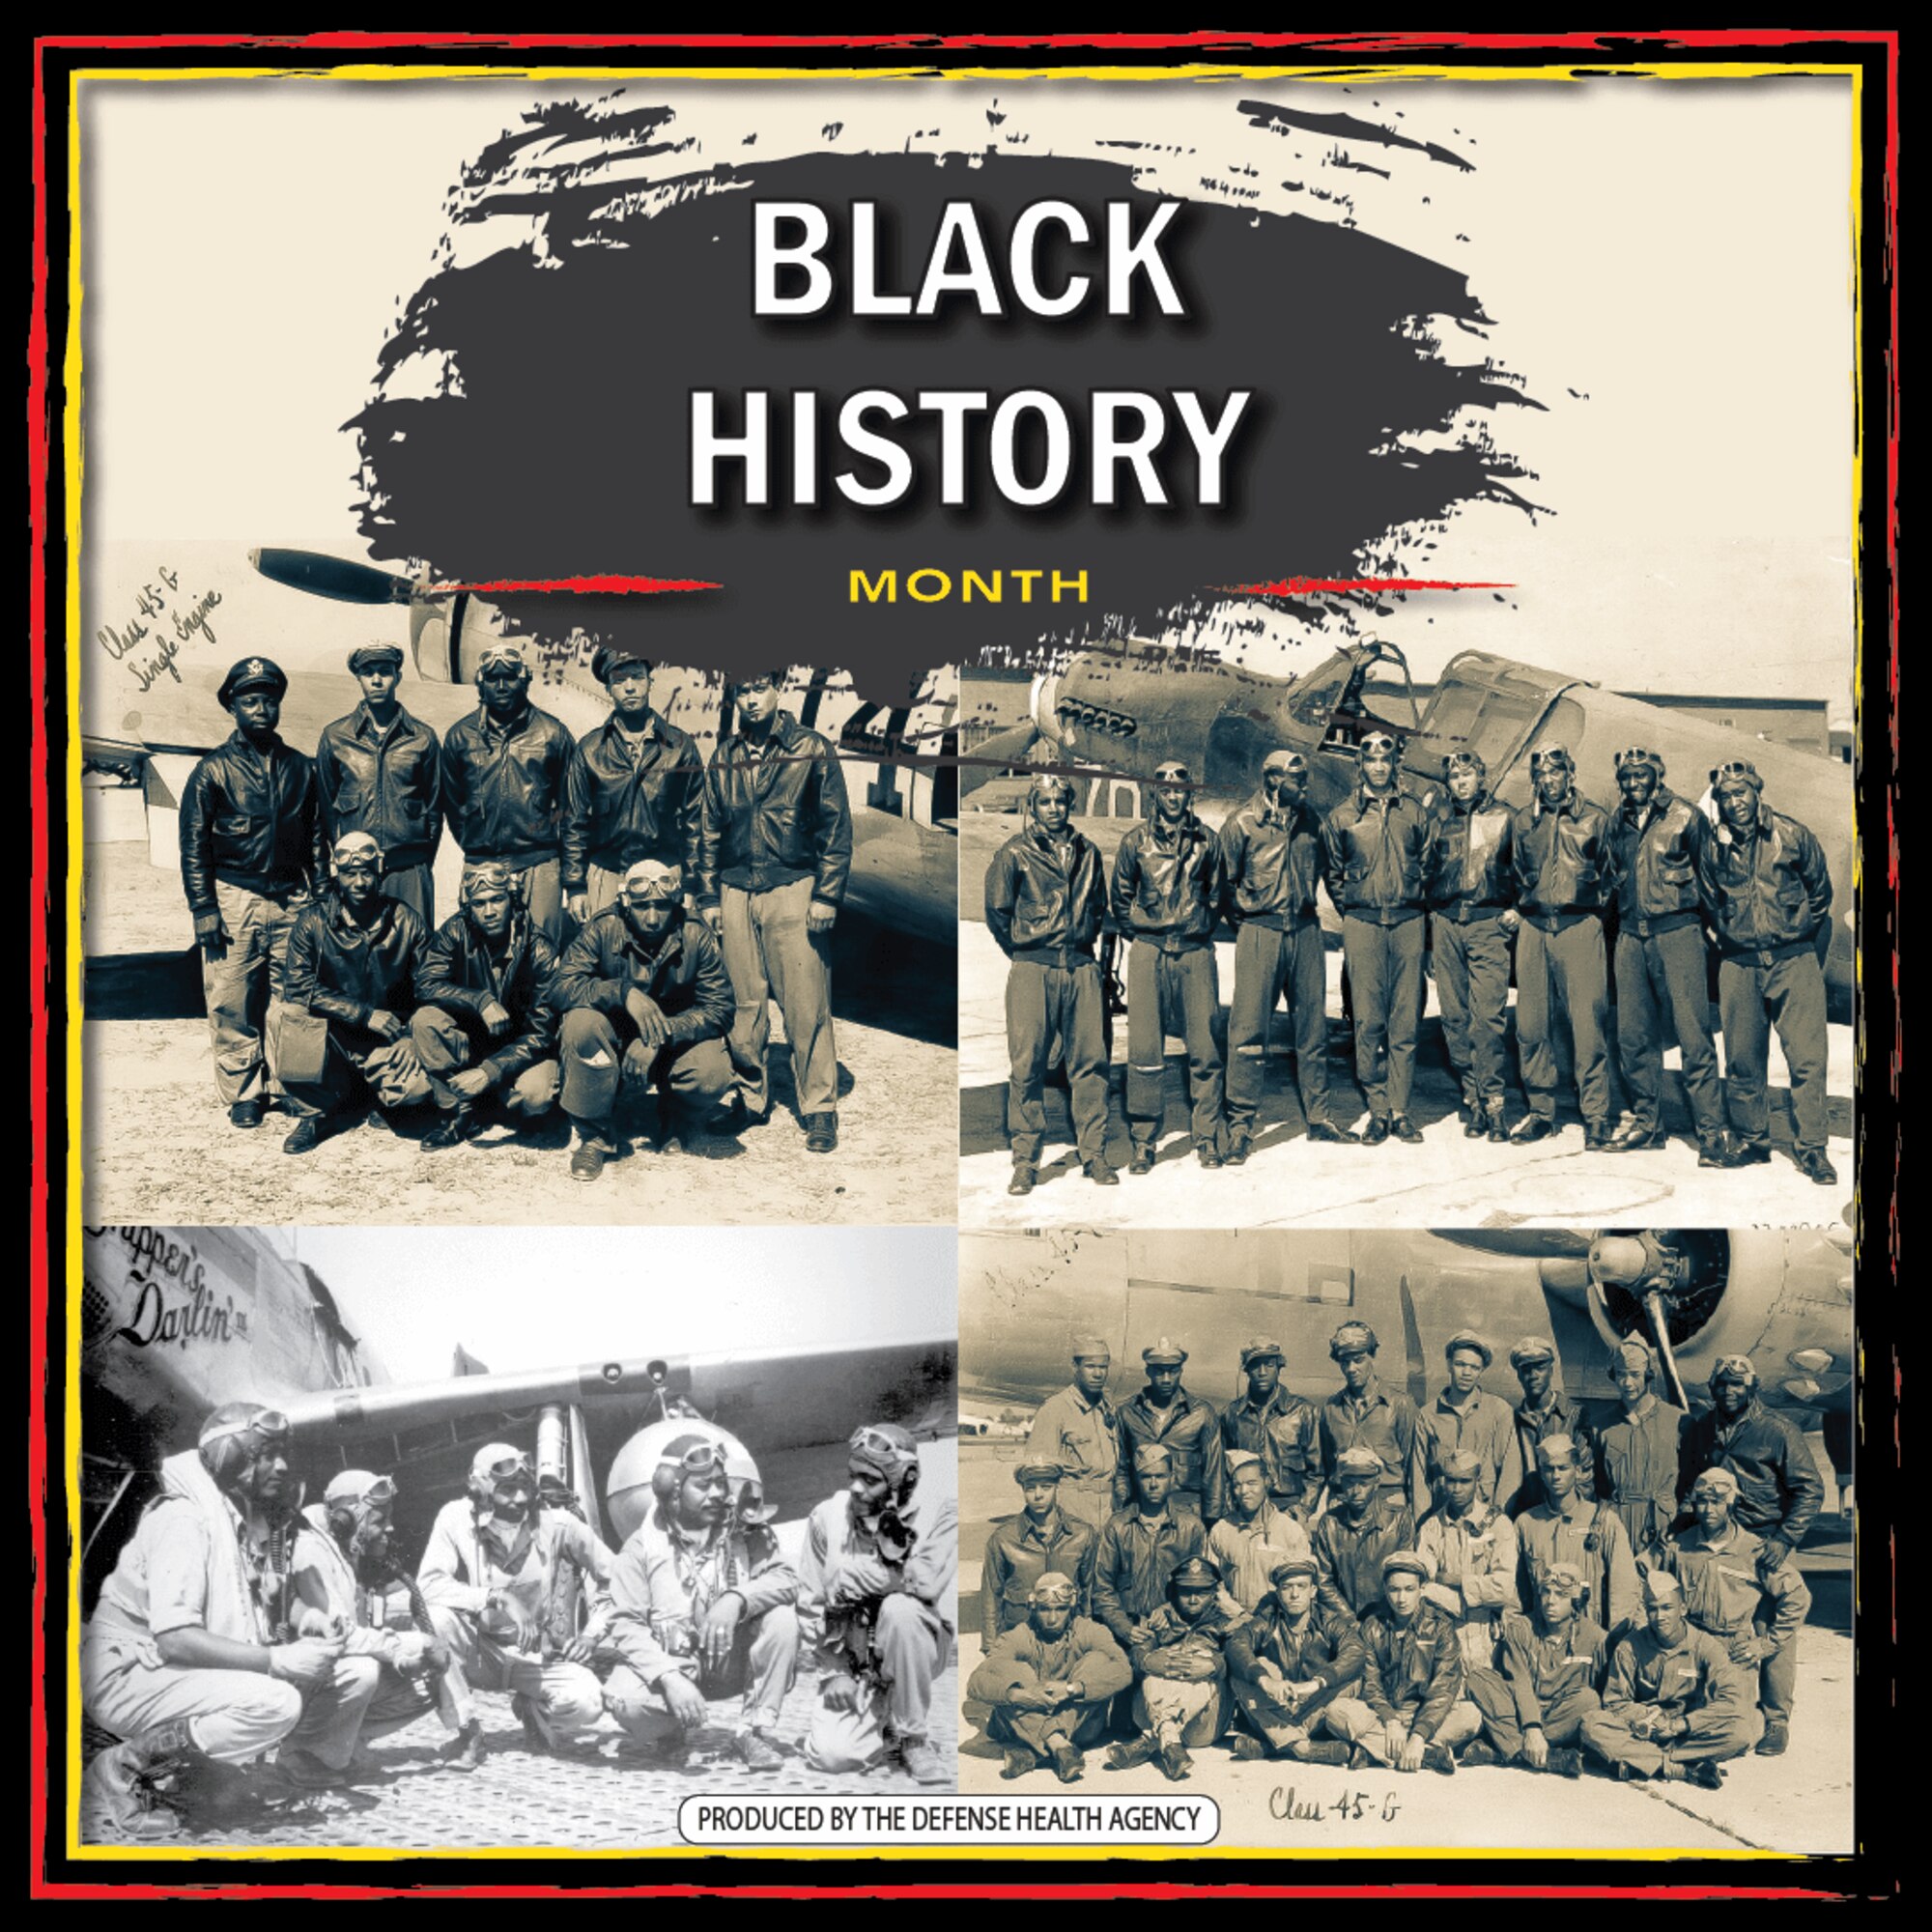 Historical photos of Black airmen